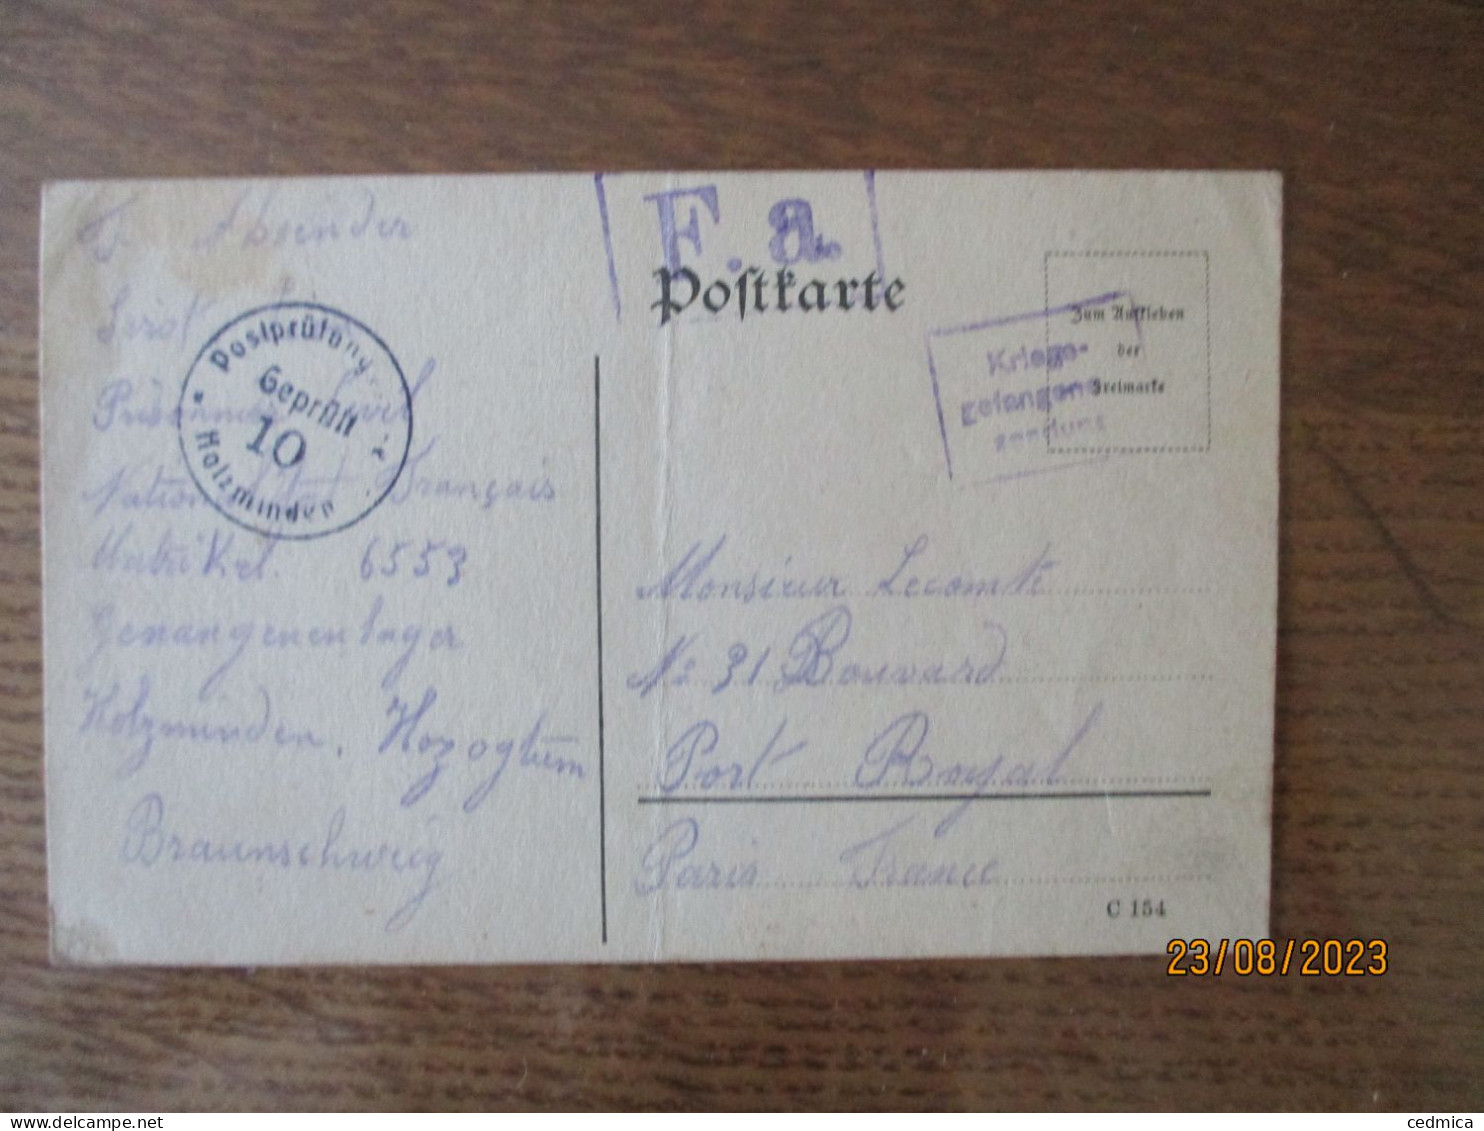 POSTPRÜFUNG GEPRÜFT 10 HOLZMINDEN DU 15 NOVEMBRE 1917 F.a. - Police & Gendarmerie